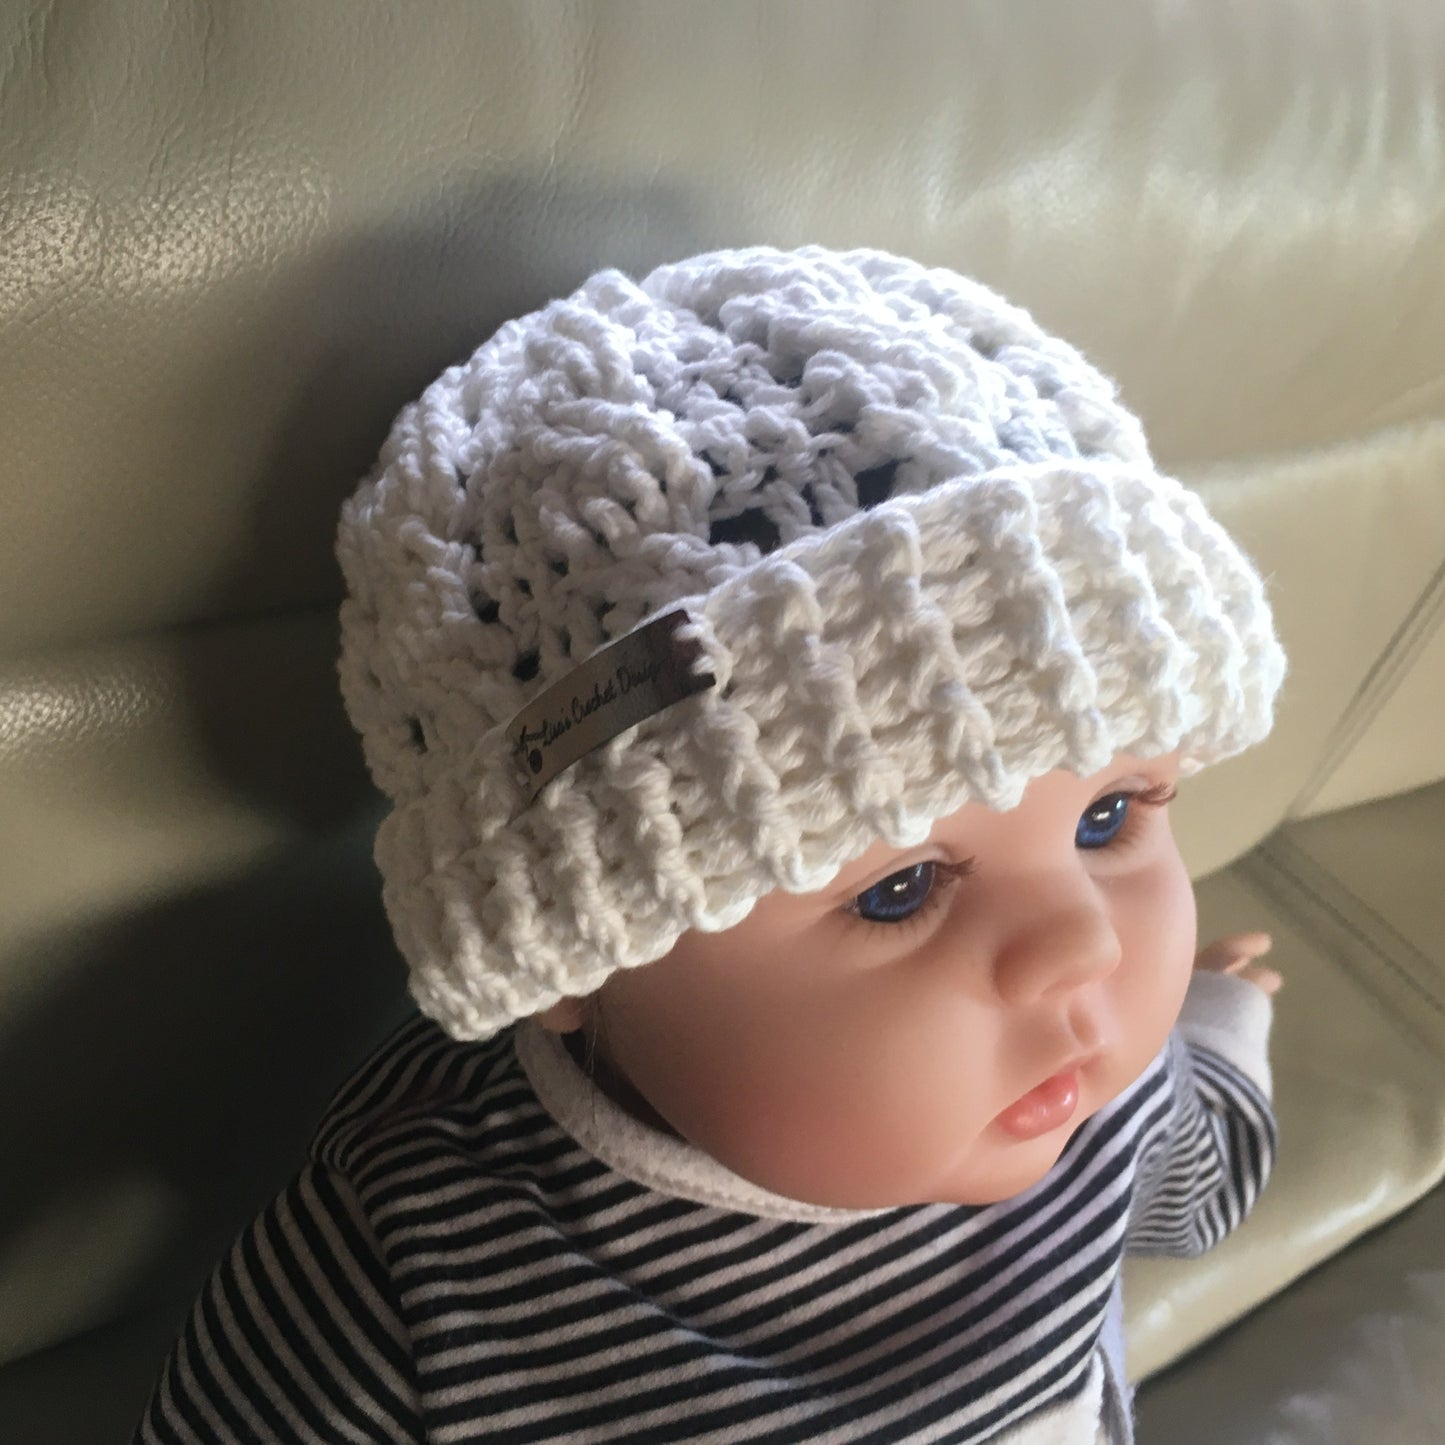 Harper Crochet Baby Dress Crochet Pattern Newborn to 4 Years with Bonus Hat Pattern